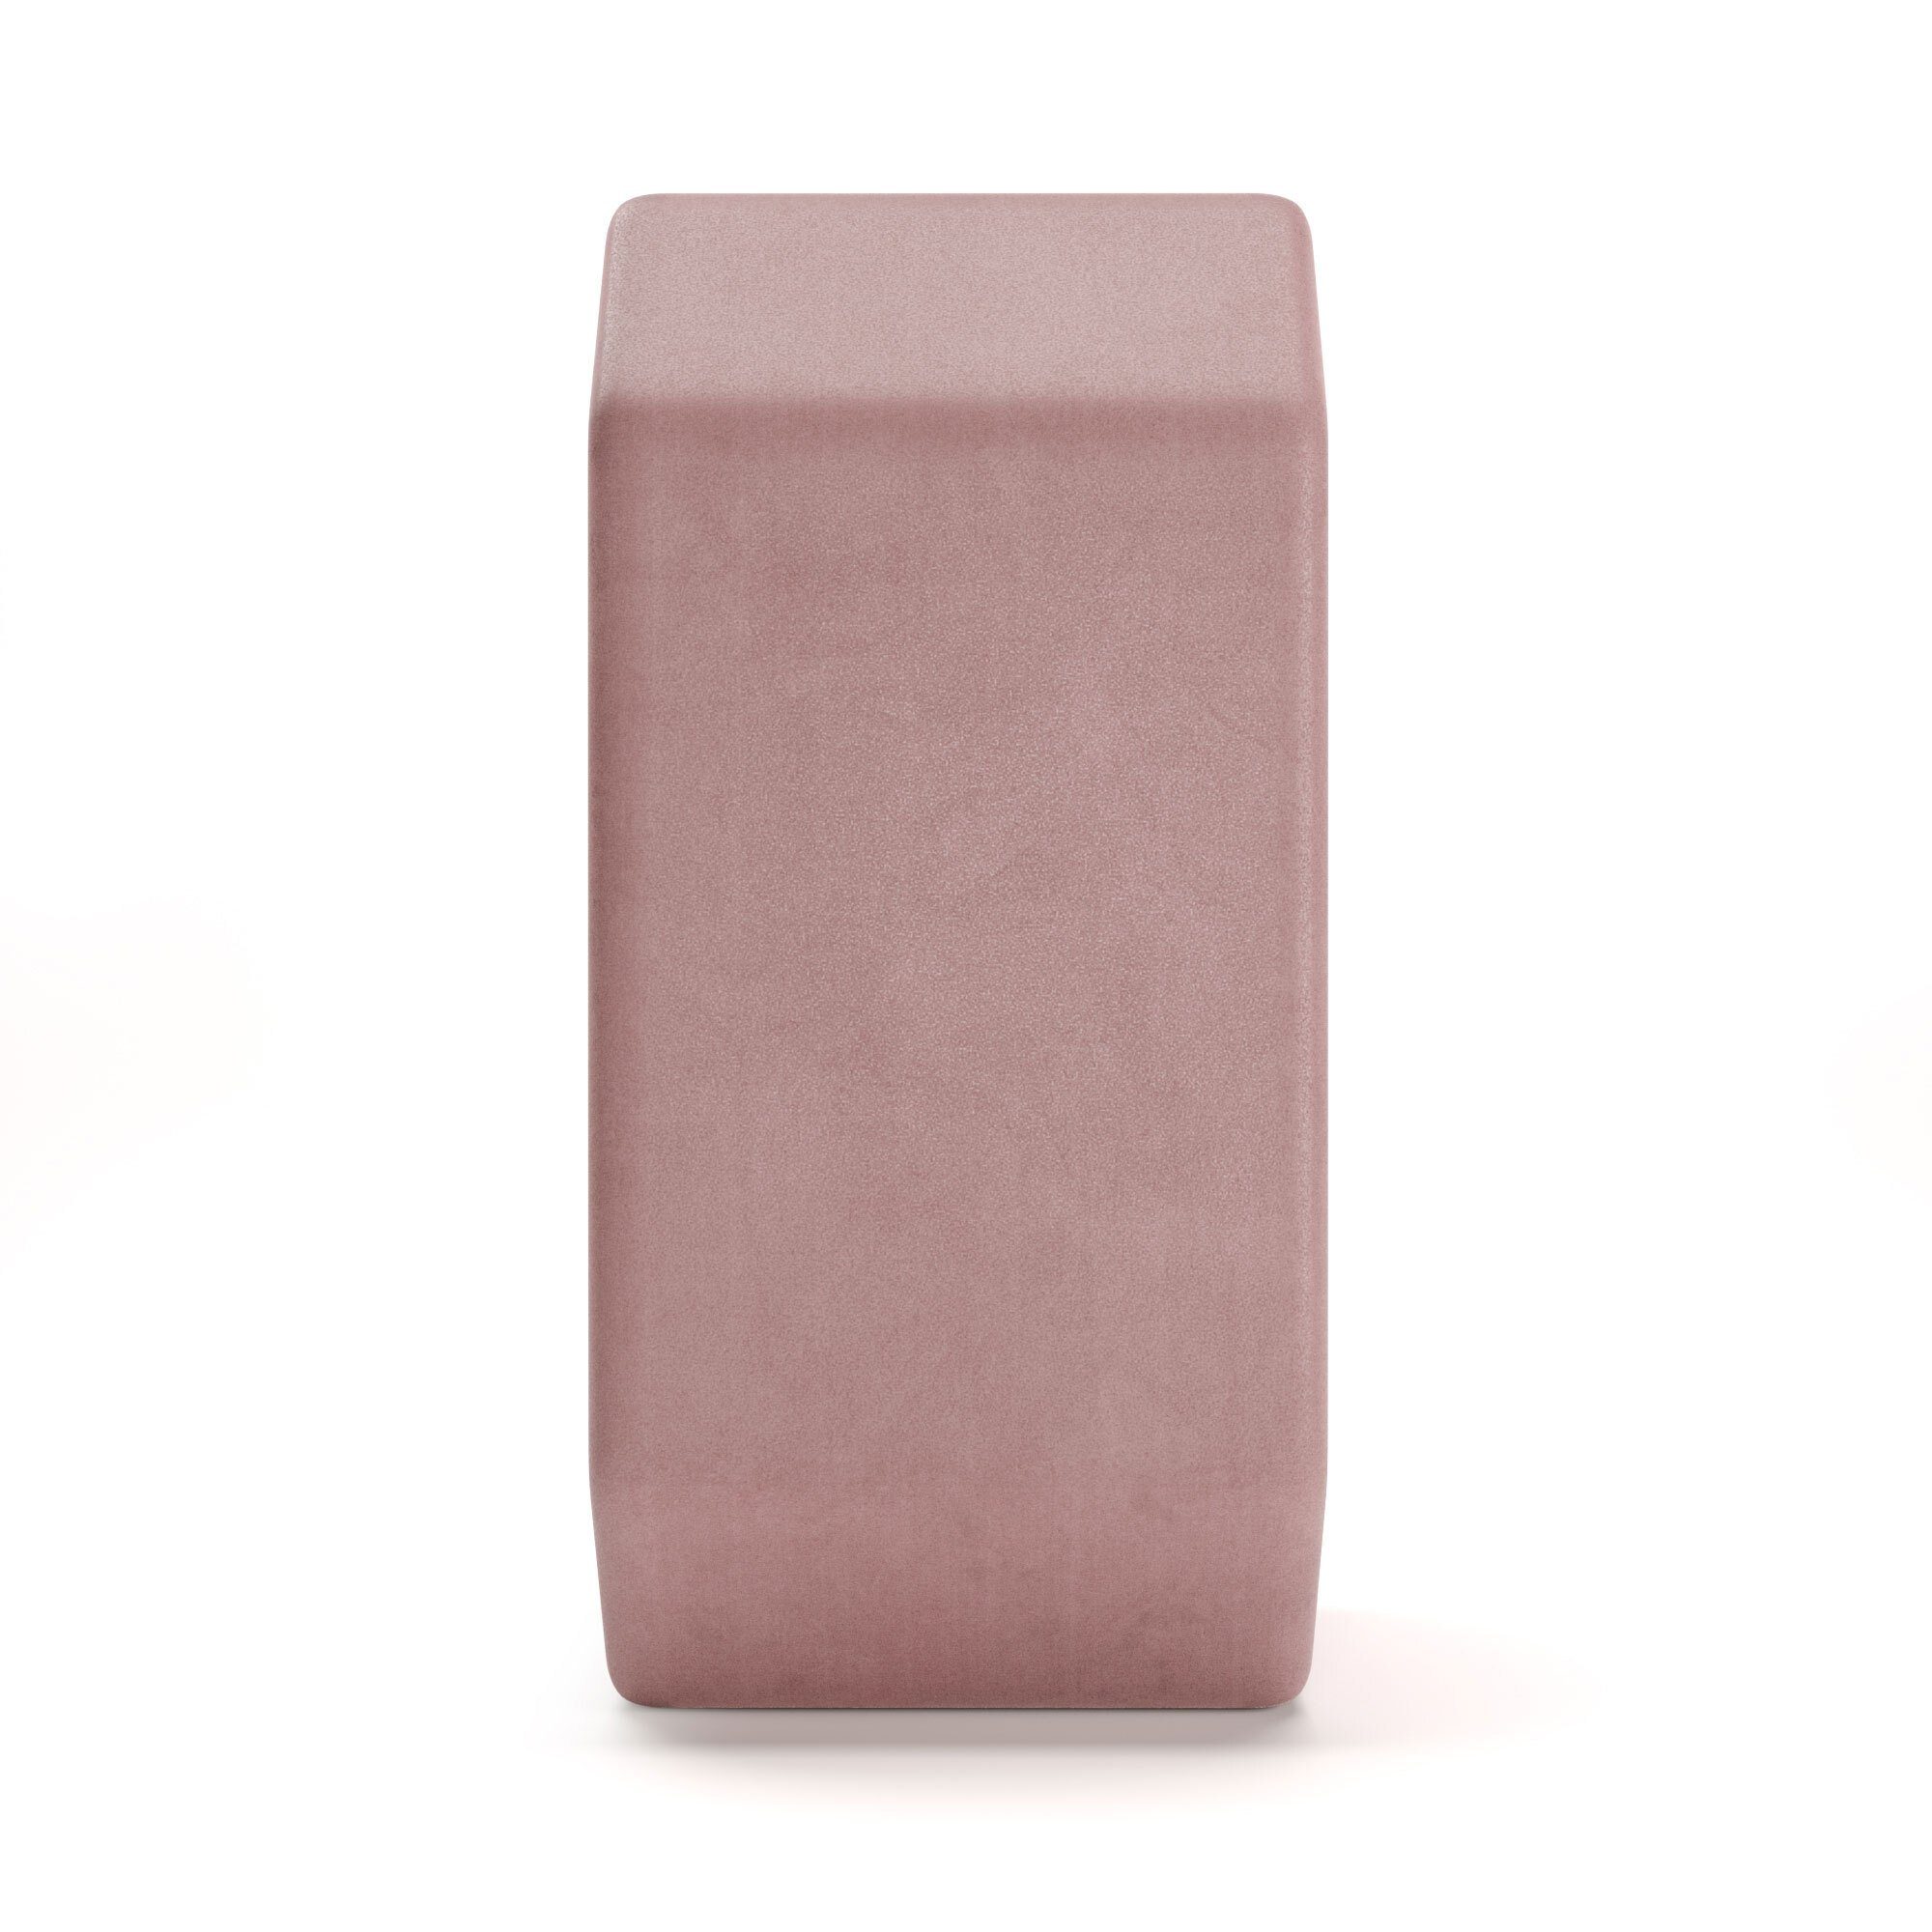 set & Soft-Touch NEXT Oberfläche rutschfeste Yogablock yoga-blöcke handtuch, LEVEL YEAZ - pink